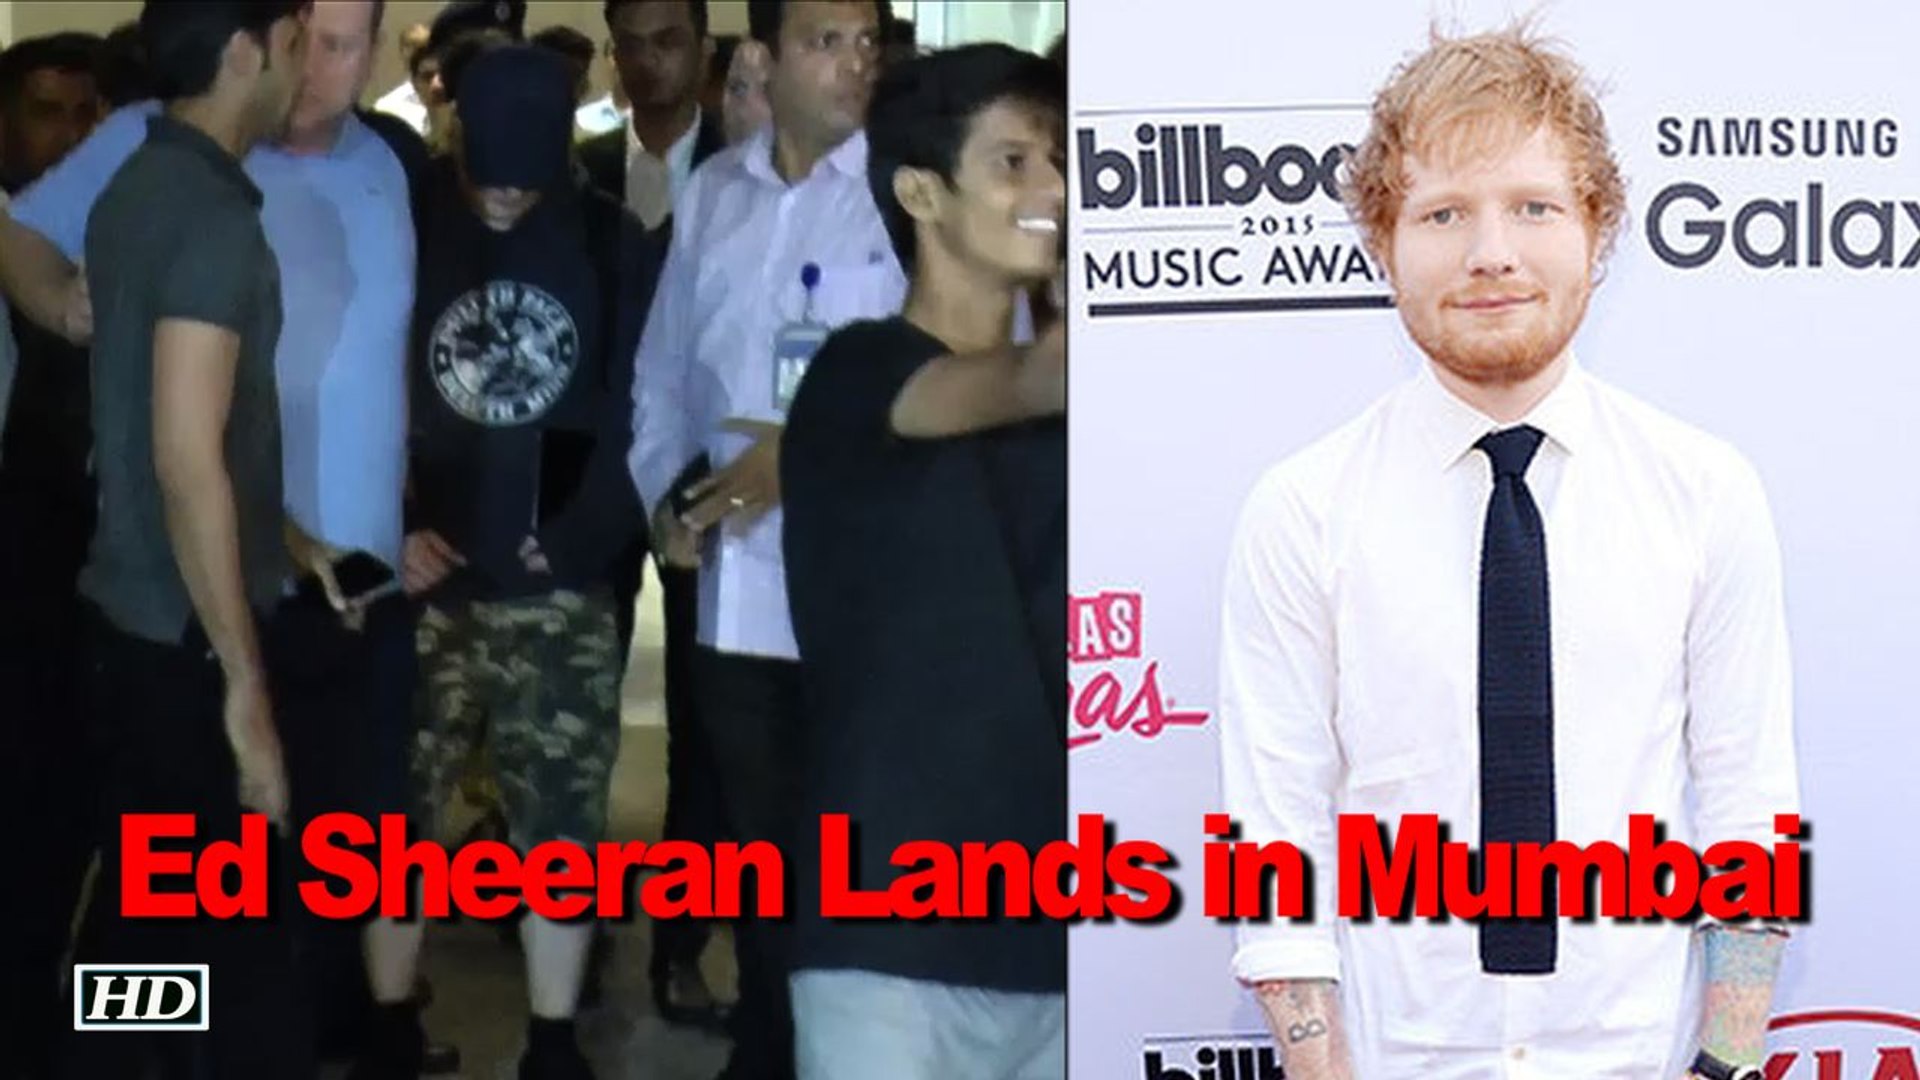 Ed Sheeran 'Shape of You' Singer Lands in Mumbai